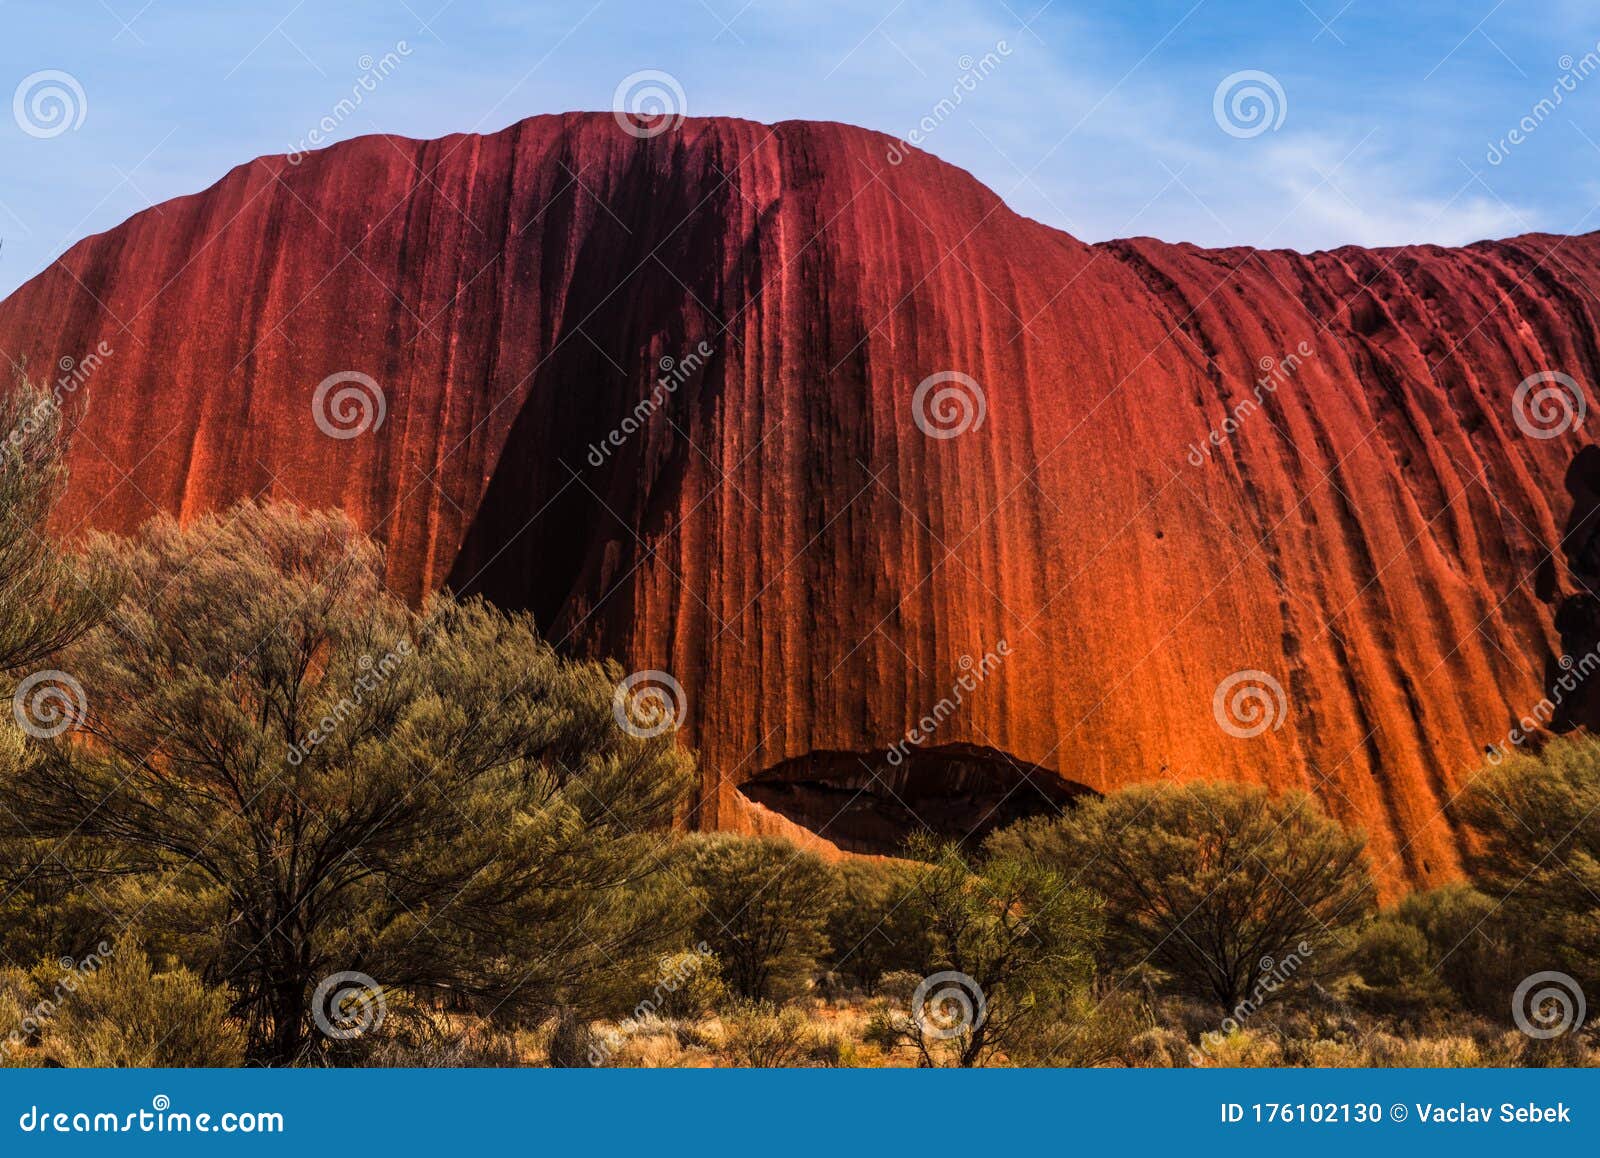 Beautiful View Of Uluru Australia Editorial Image Image Of Bush Grand 176102130